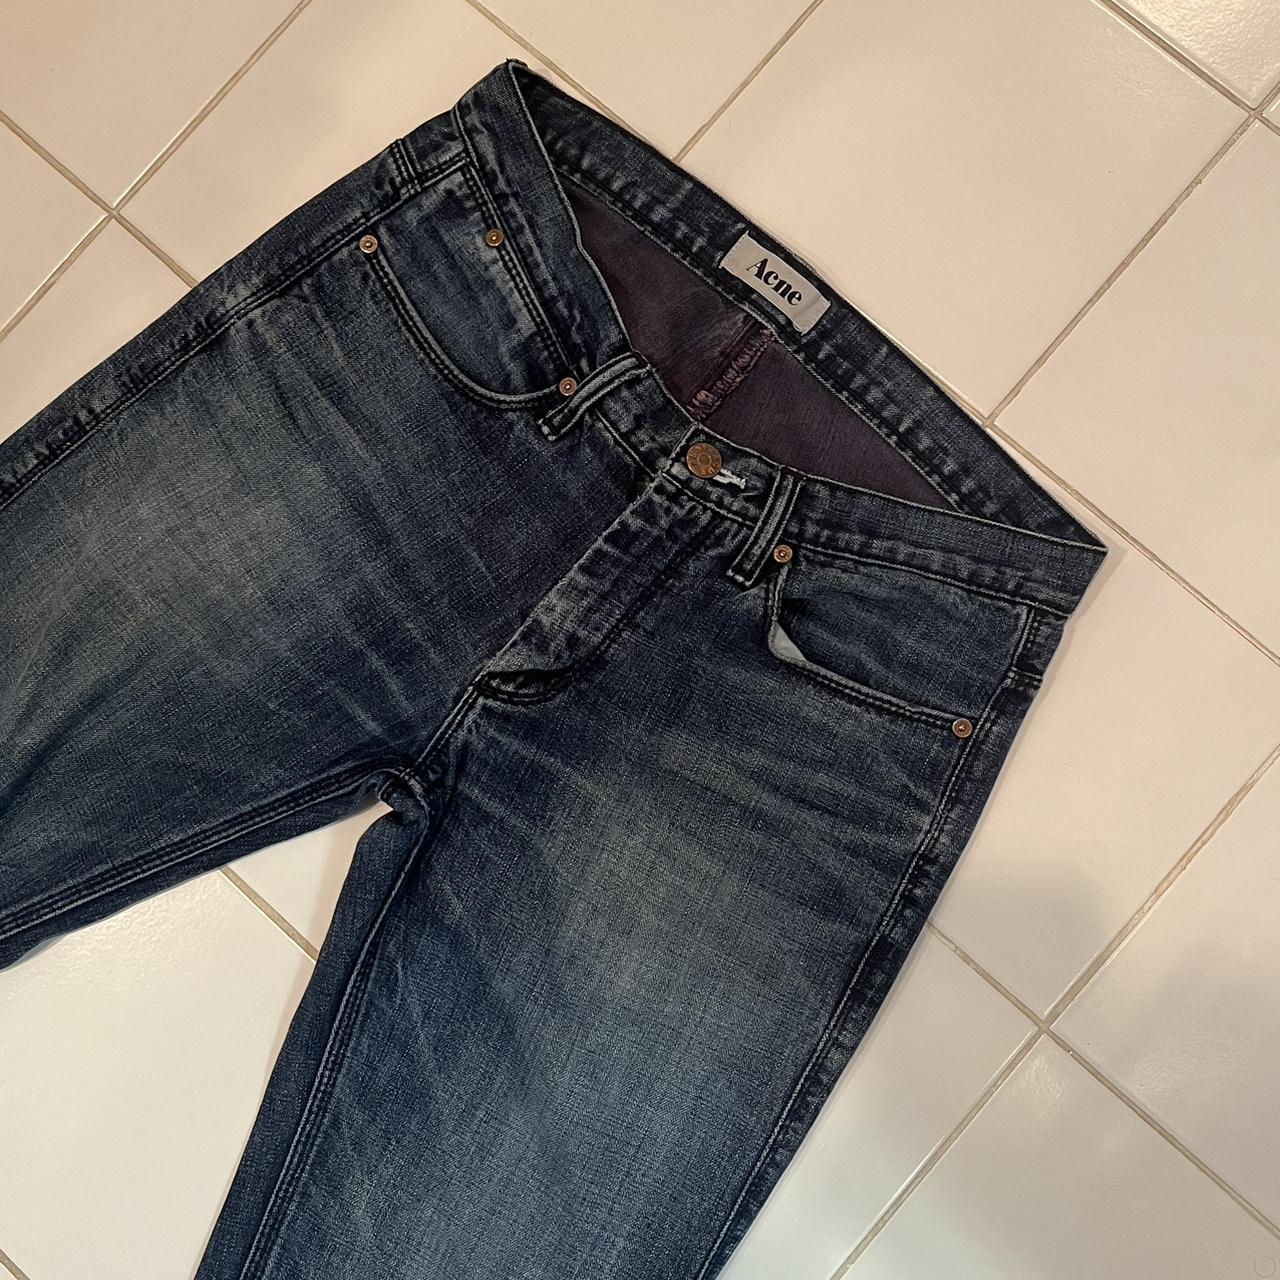 Acne studios jeans 👖👖 Size 29 - Depop